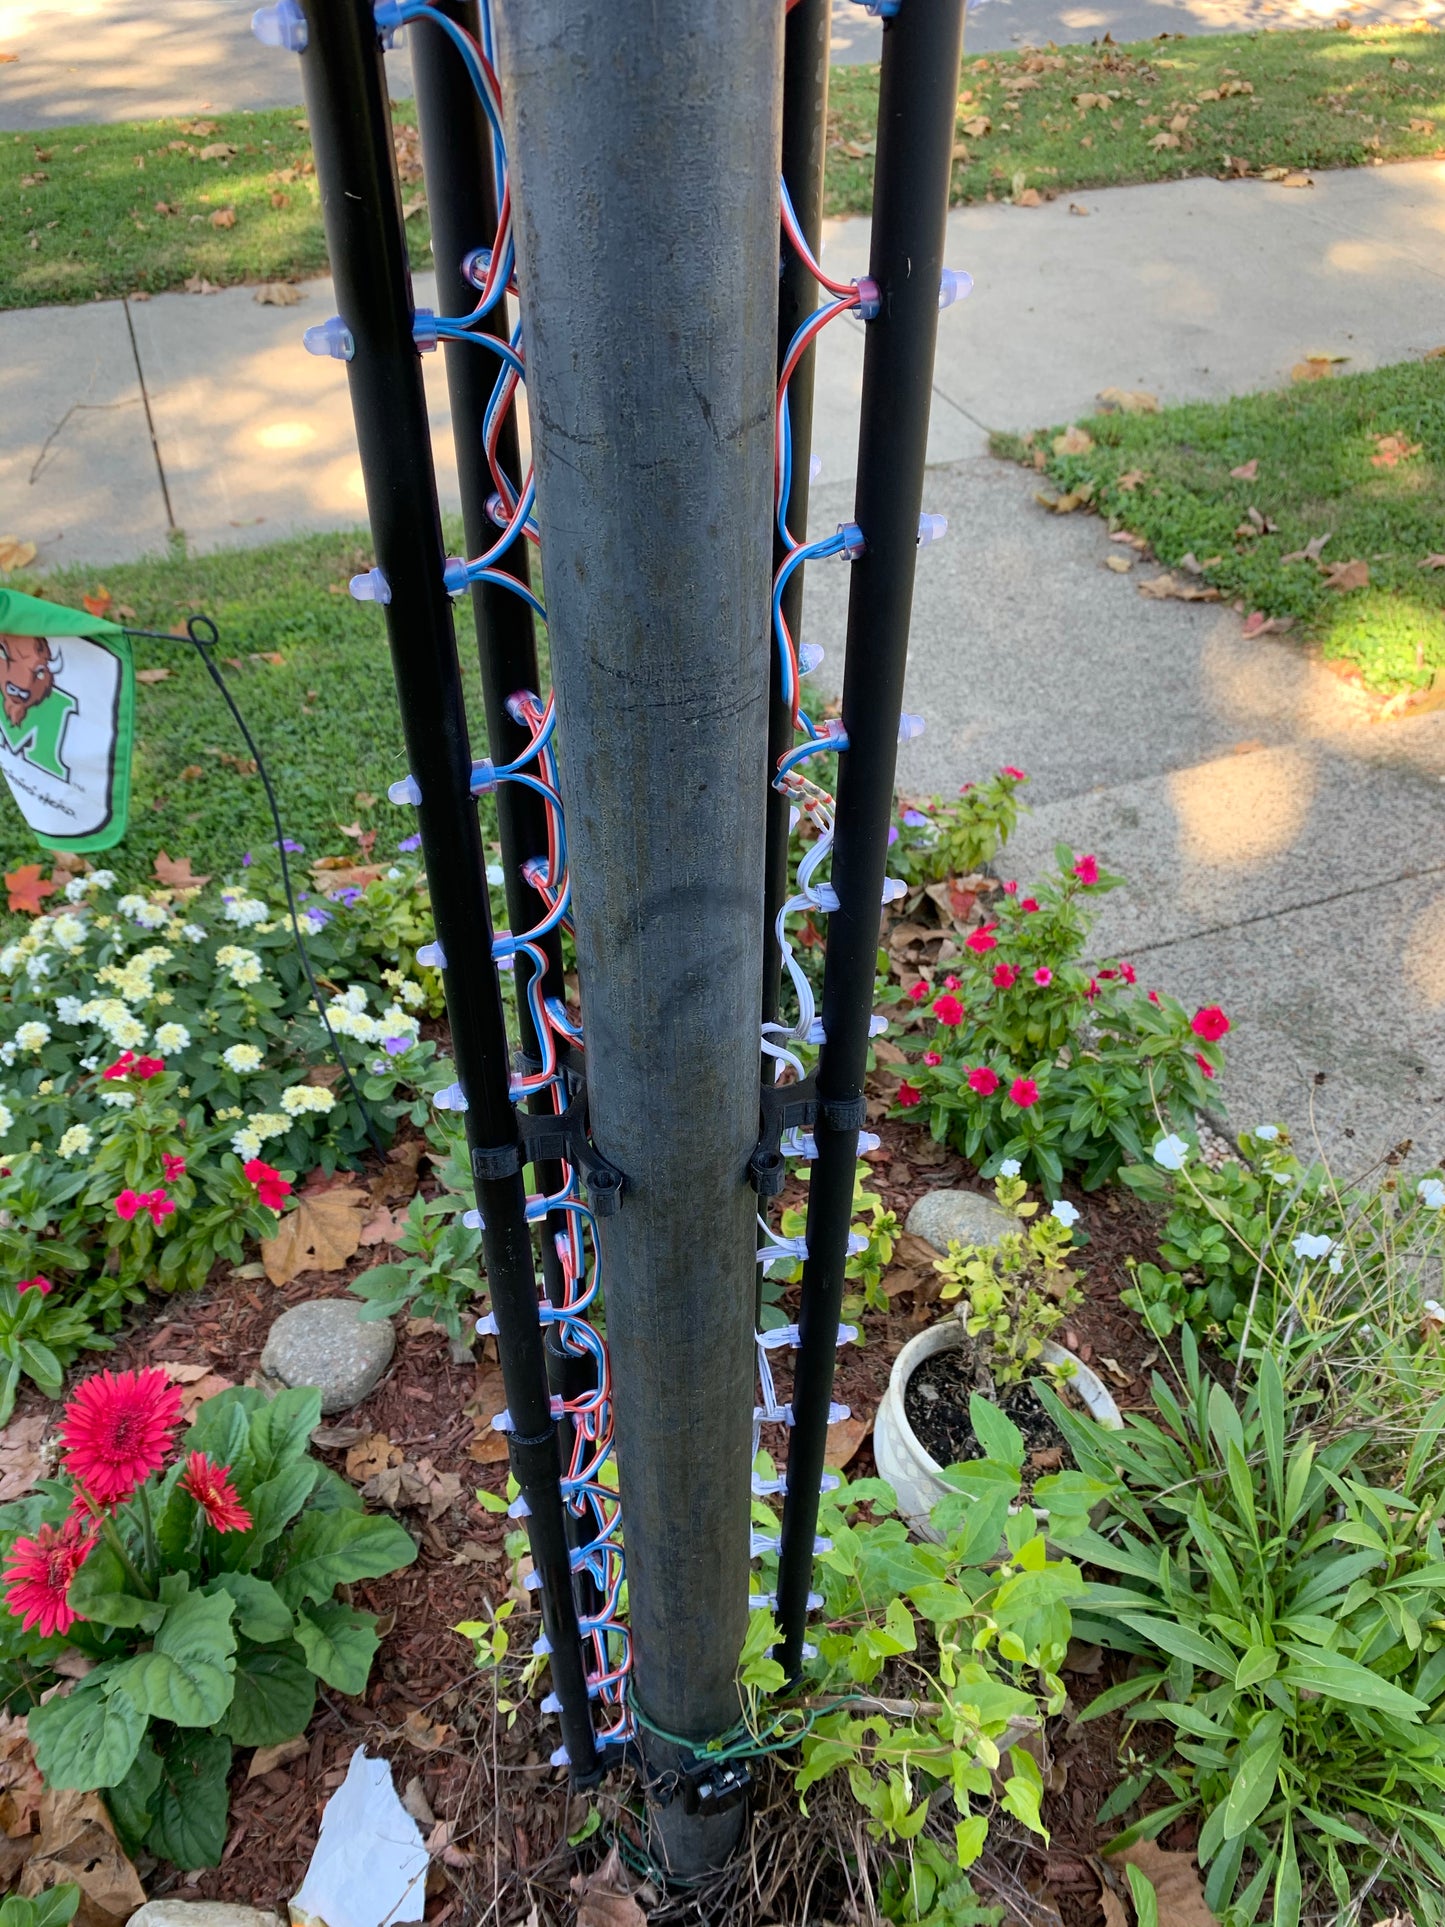 Lamp Post Pixel Pole Clamps